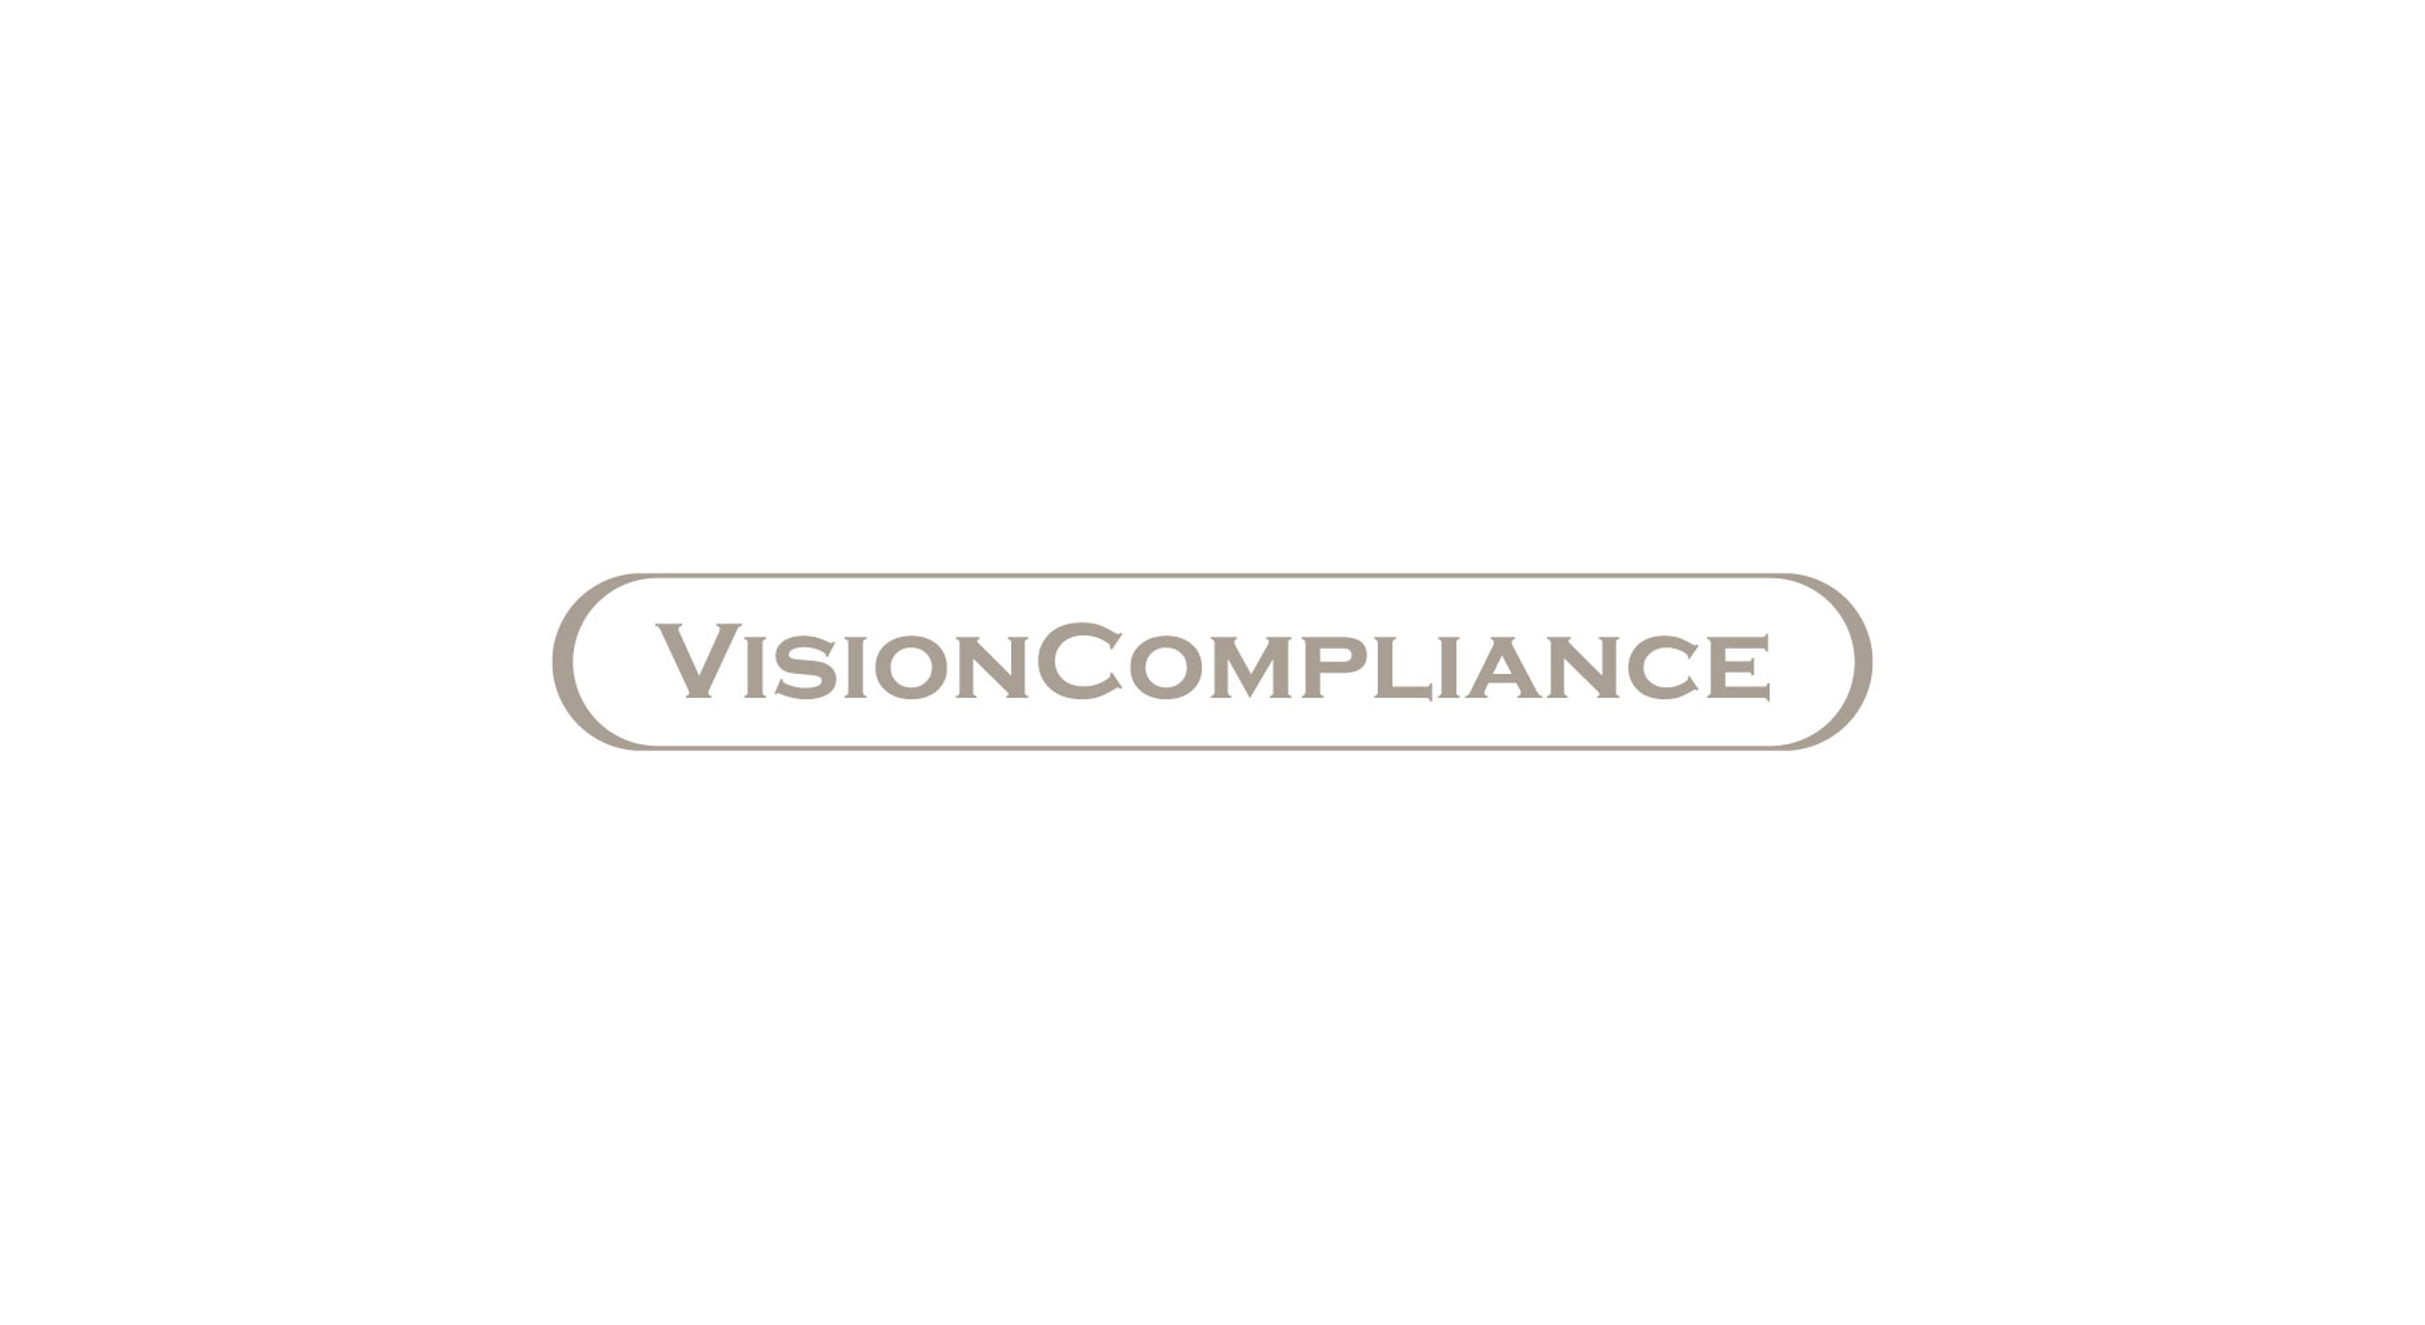 VisionCompliance